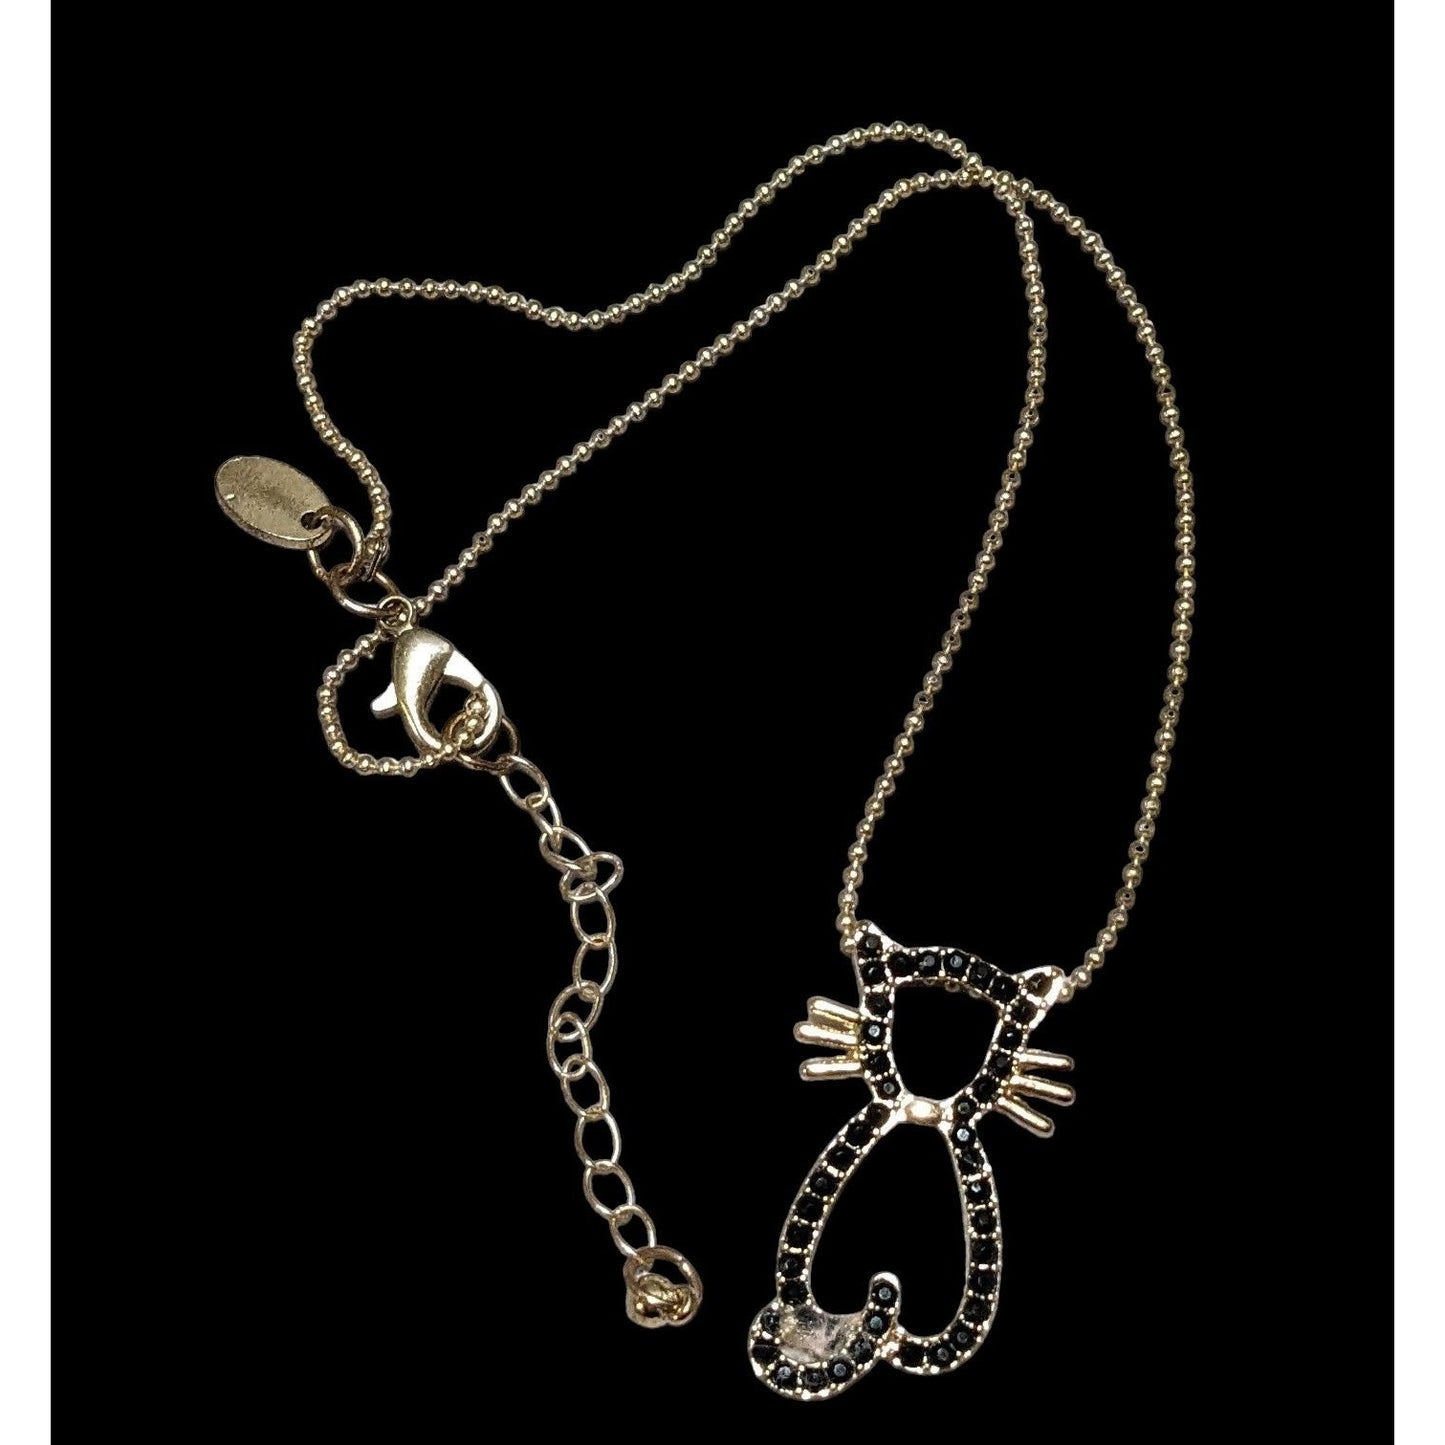 Charming Charlie Black Cat Necklace